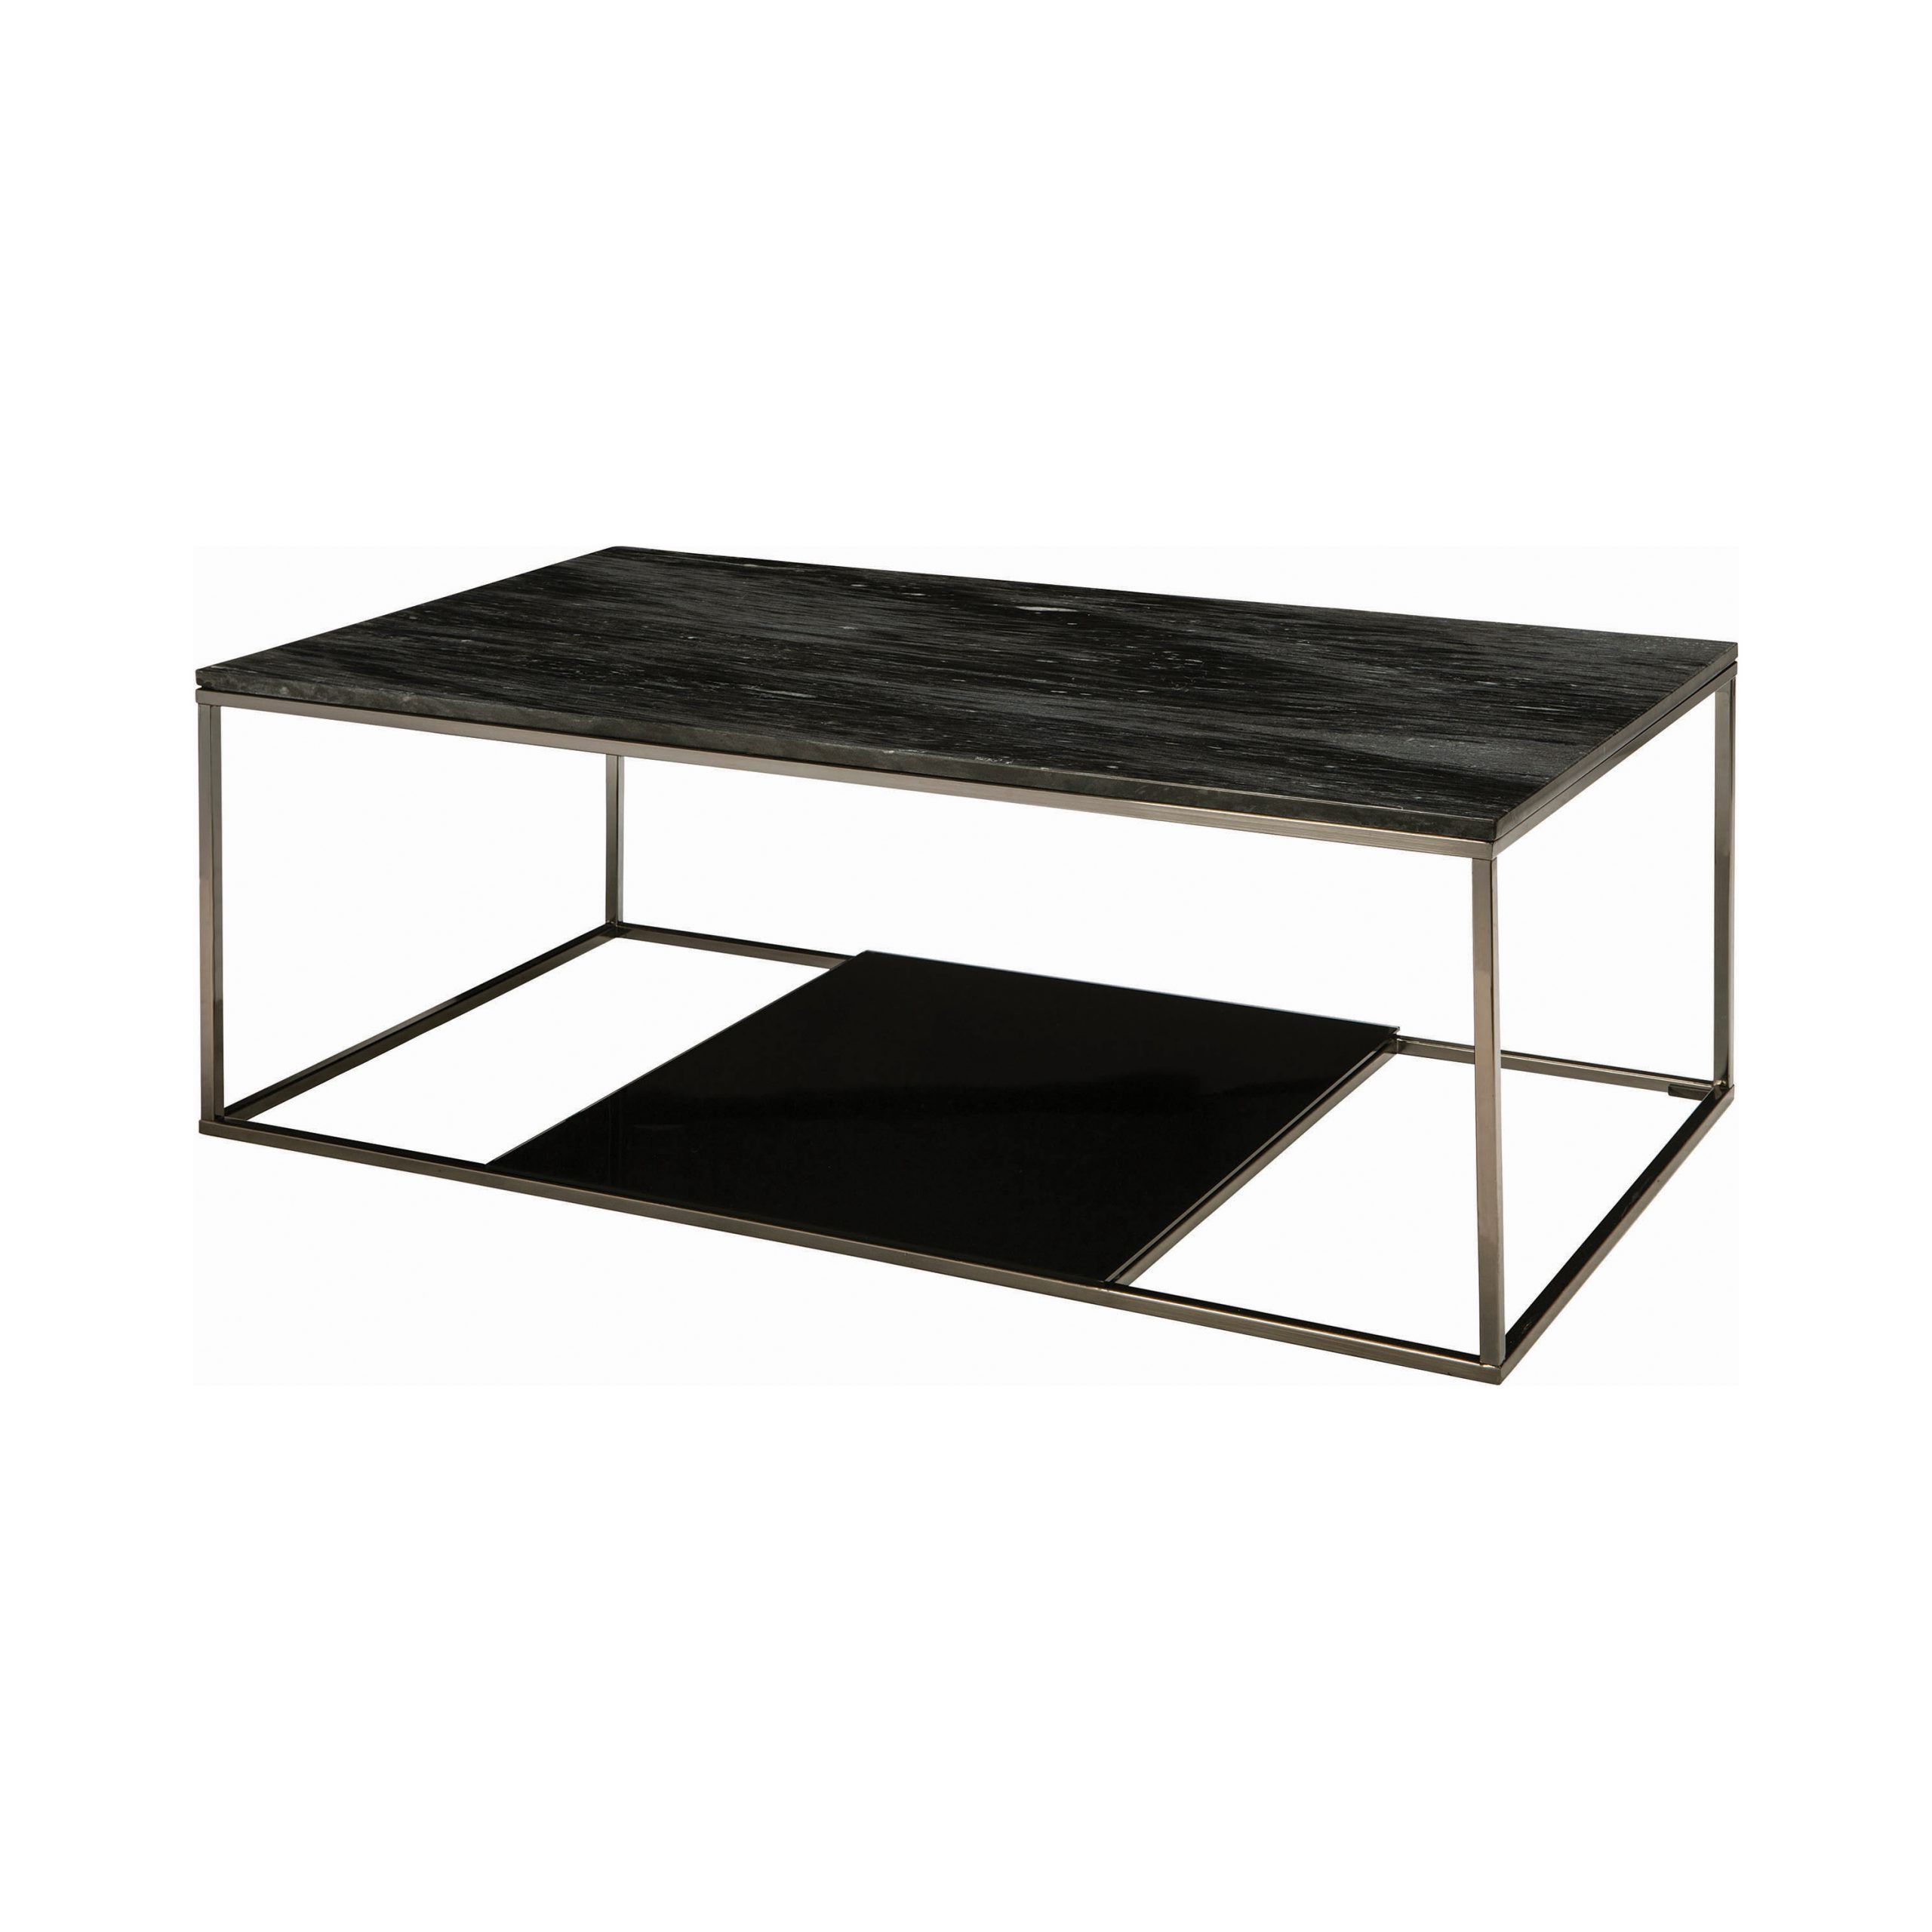 Schwartzman 1 Shelf Rectangular Coffee Table Black Regarding Well Known 1 Shelf Coffee Tables (View 18 of 20)